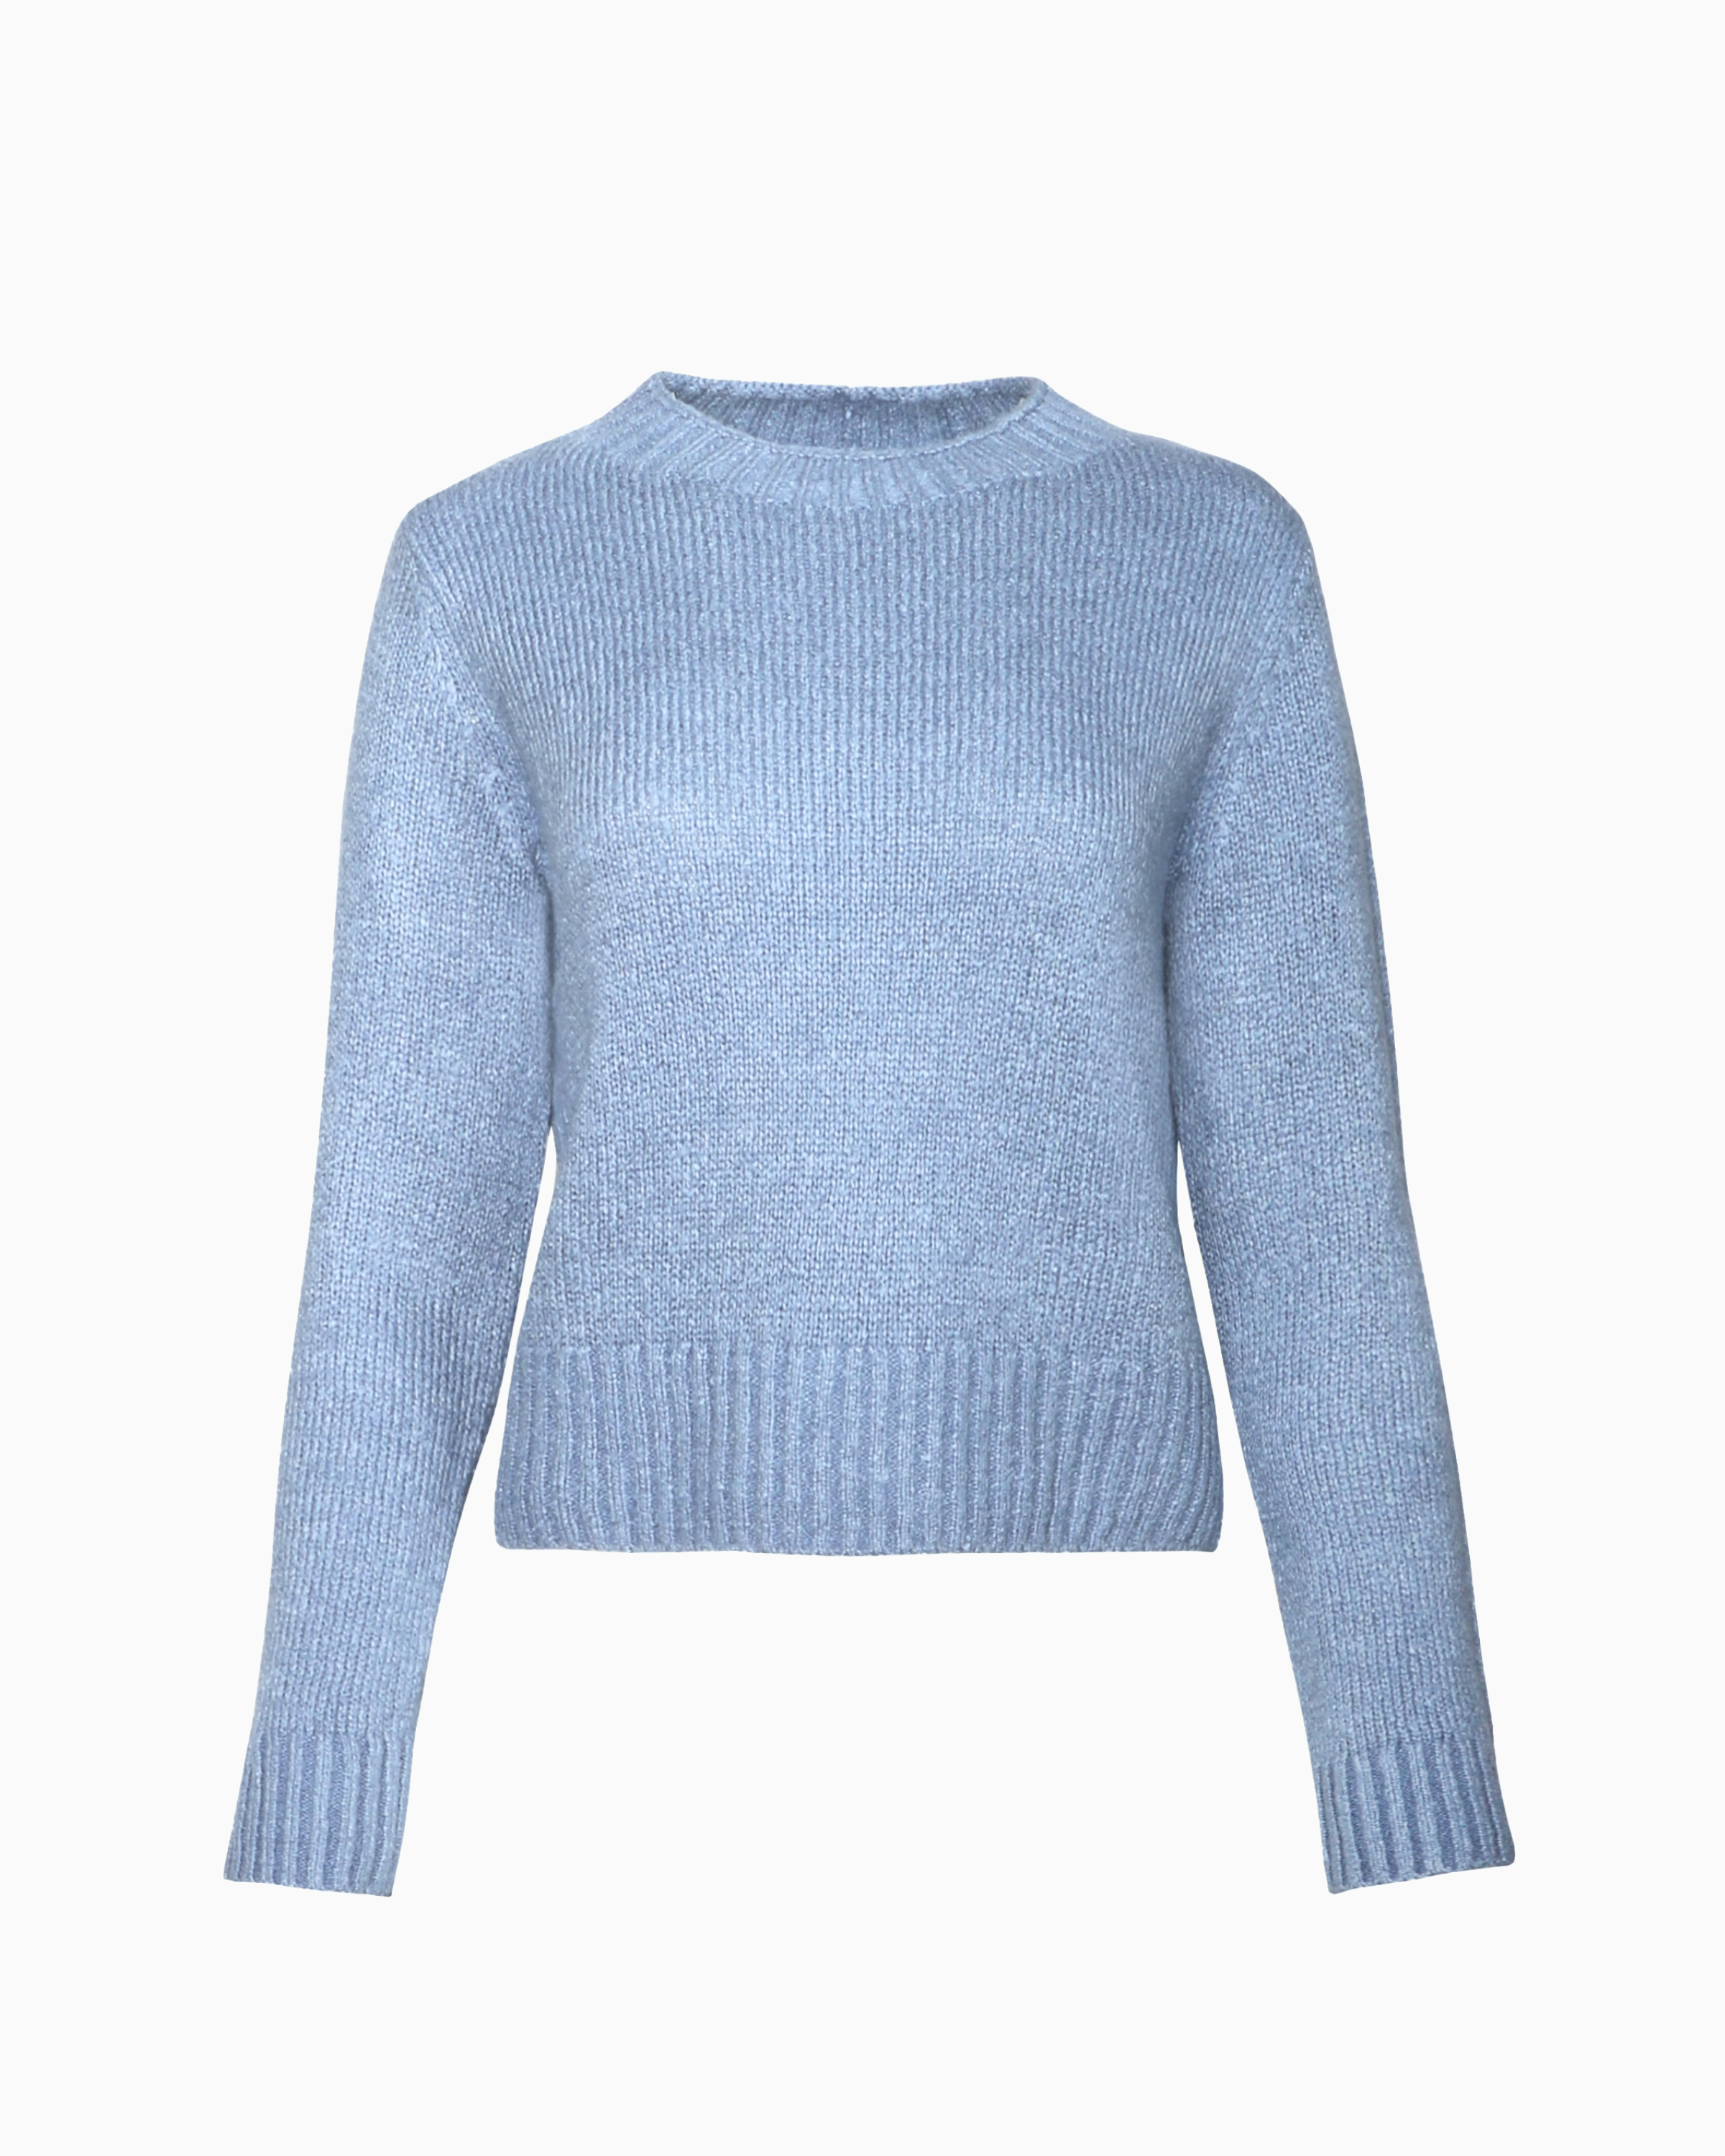 Vince Plush Silk Crew Sweater in Azure Gem